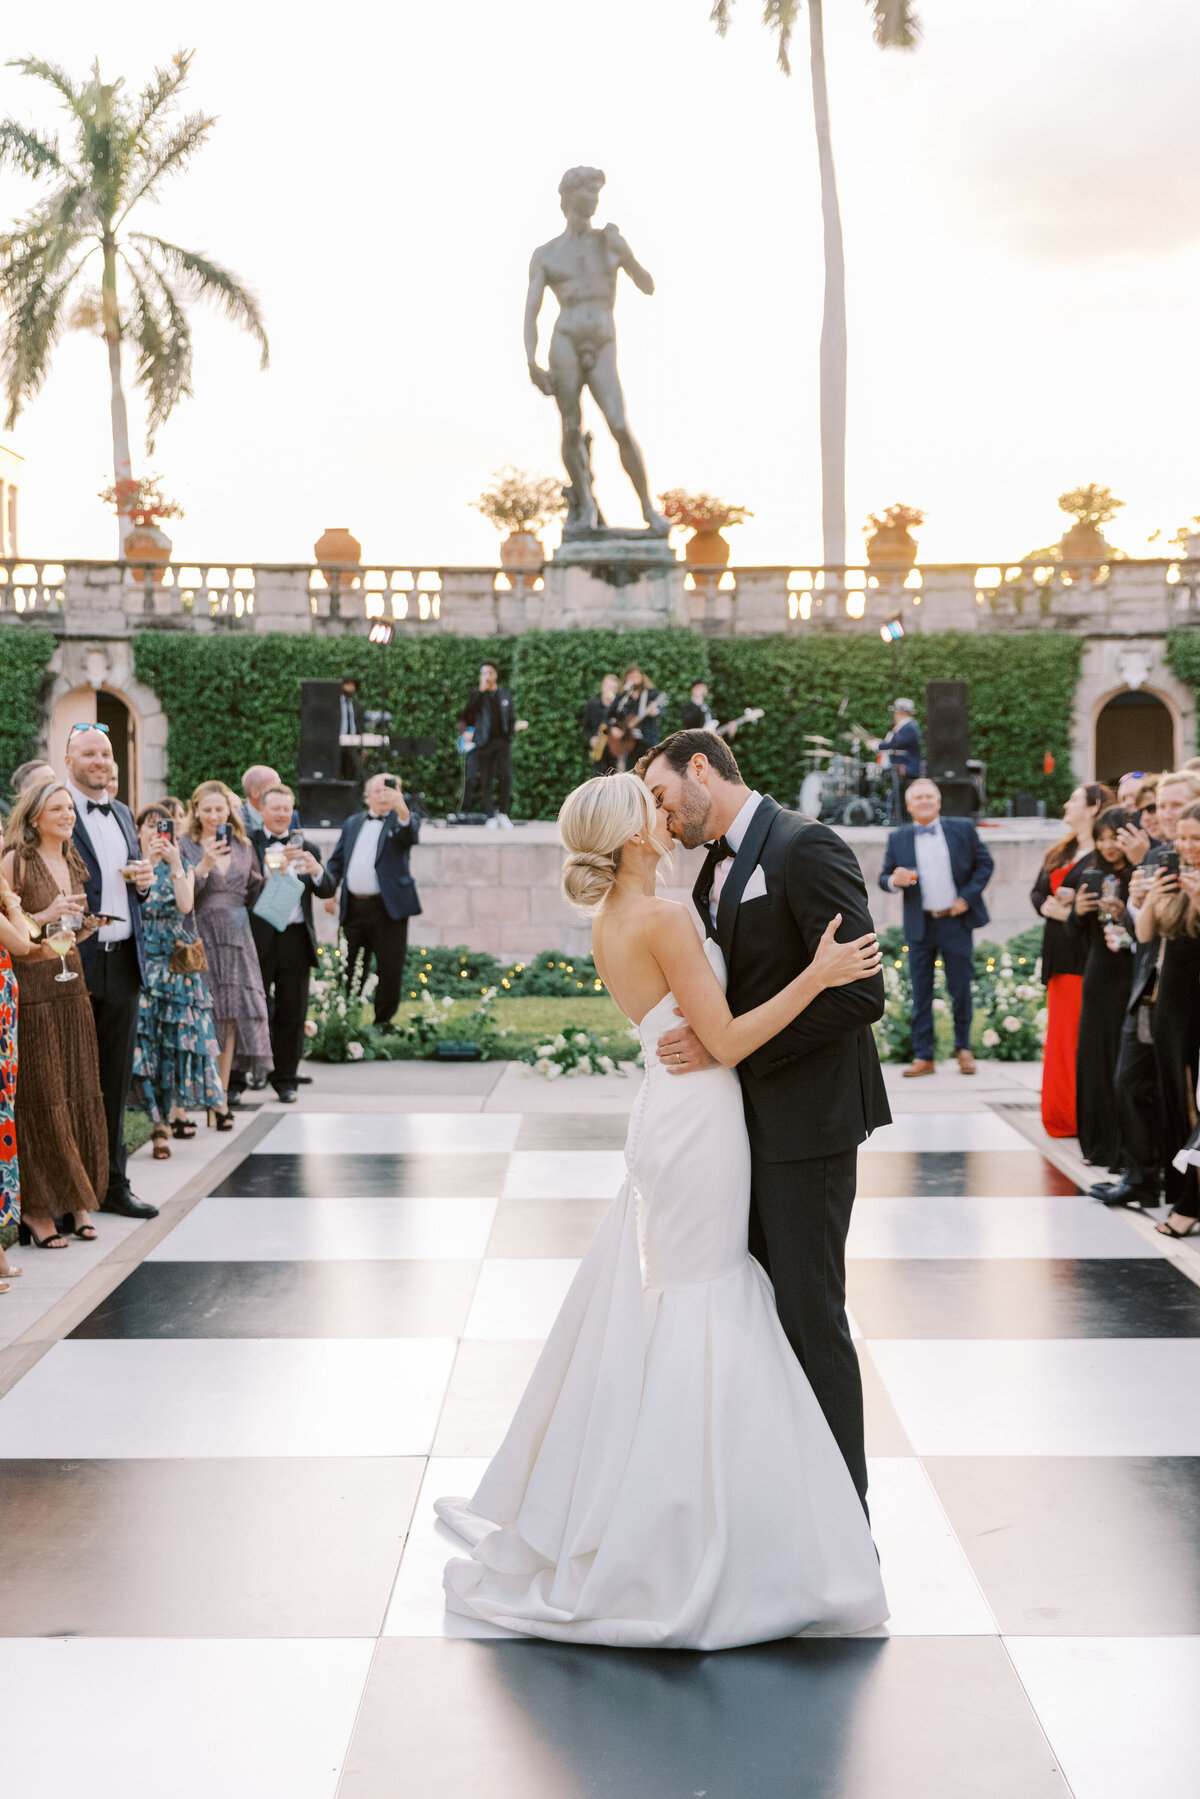 CORNELIA ZAISS PHOTOGRAPY TAYLOR + MATT WEDDING 1116